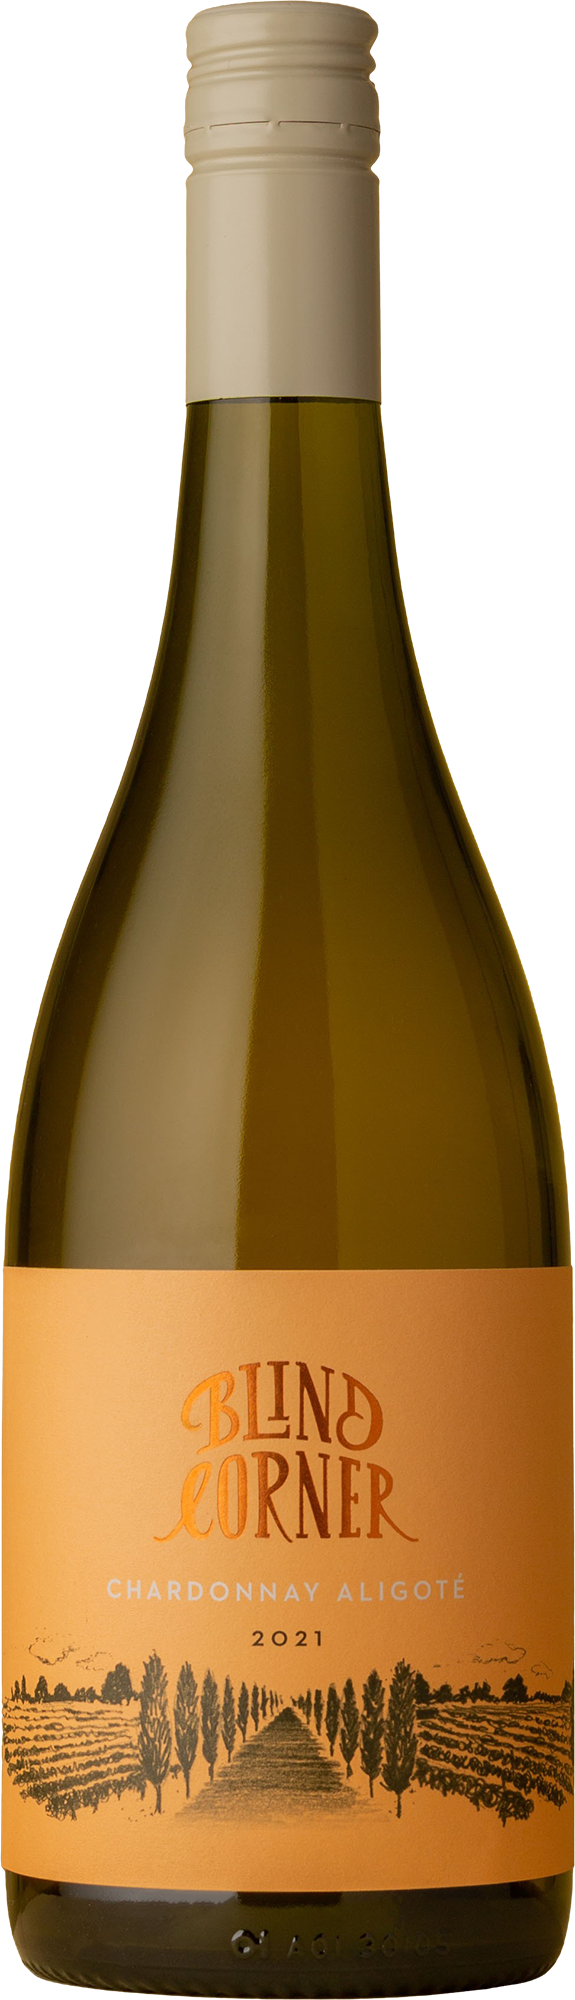 Blind Corner - Chardonnay / Aligoté 2021 White Wine